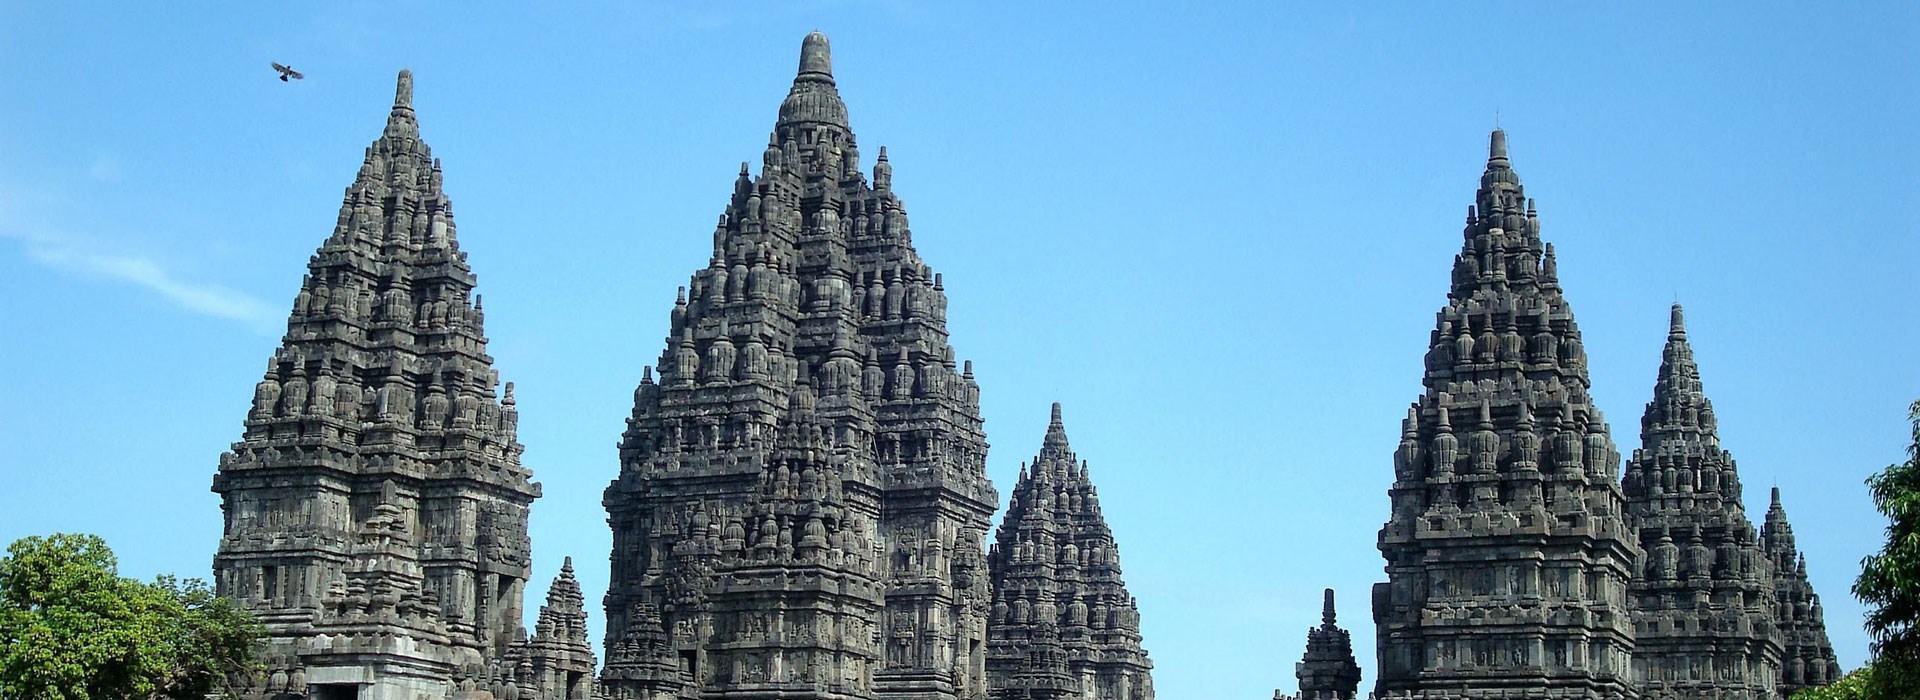 Visiter Les temples de Prambanan - Indonesie